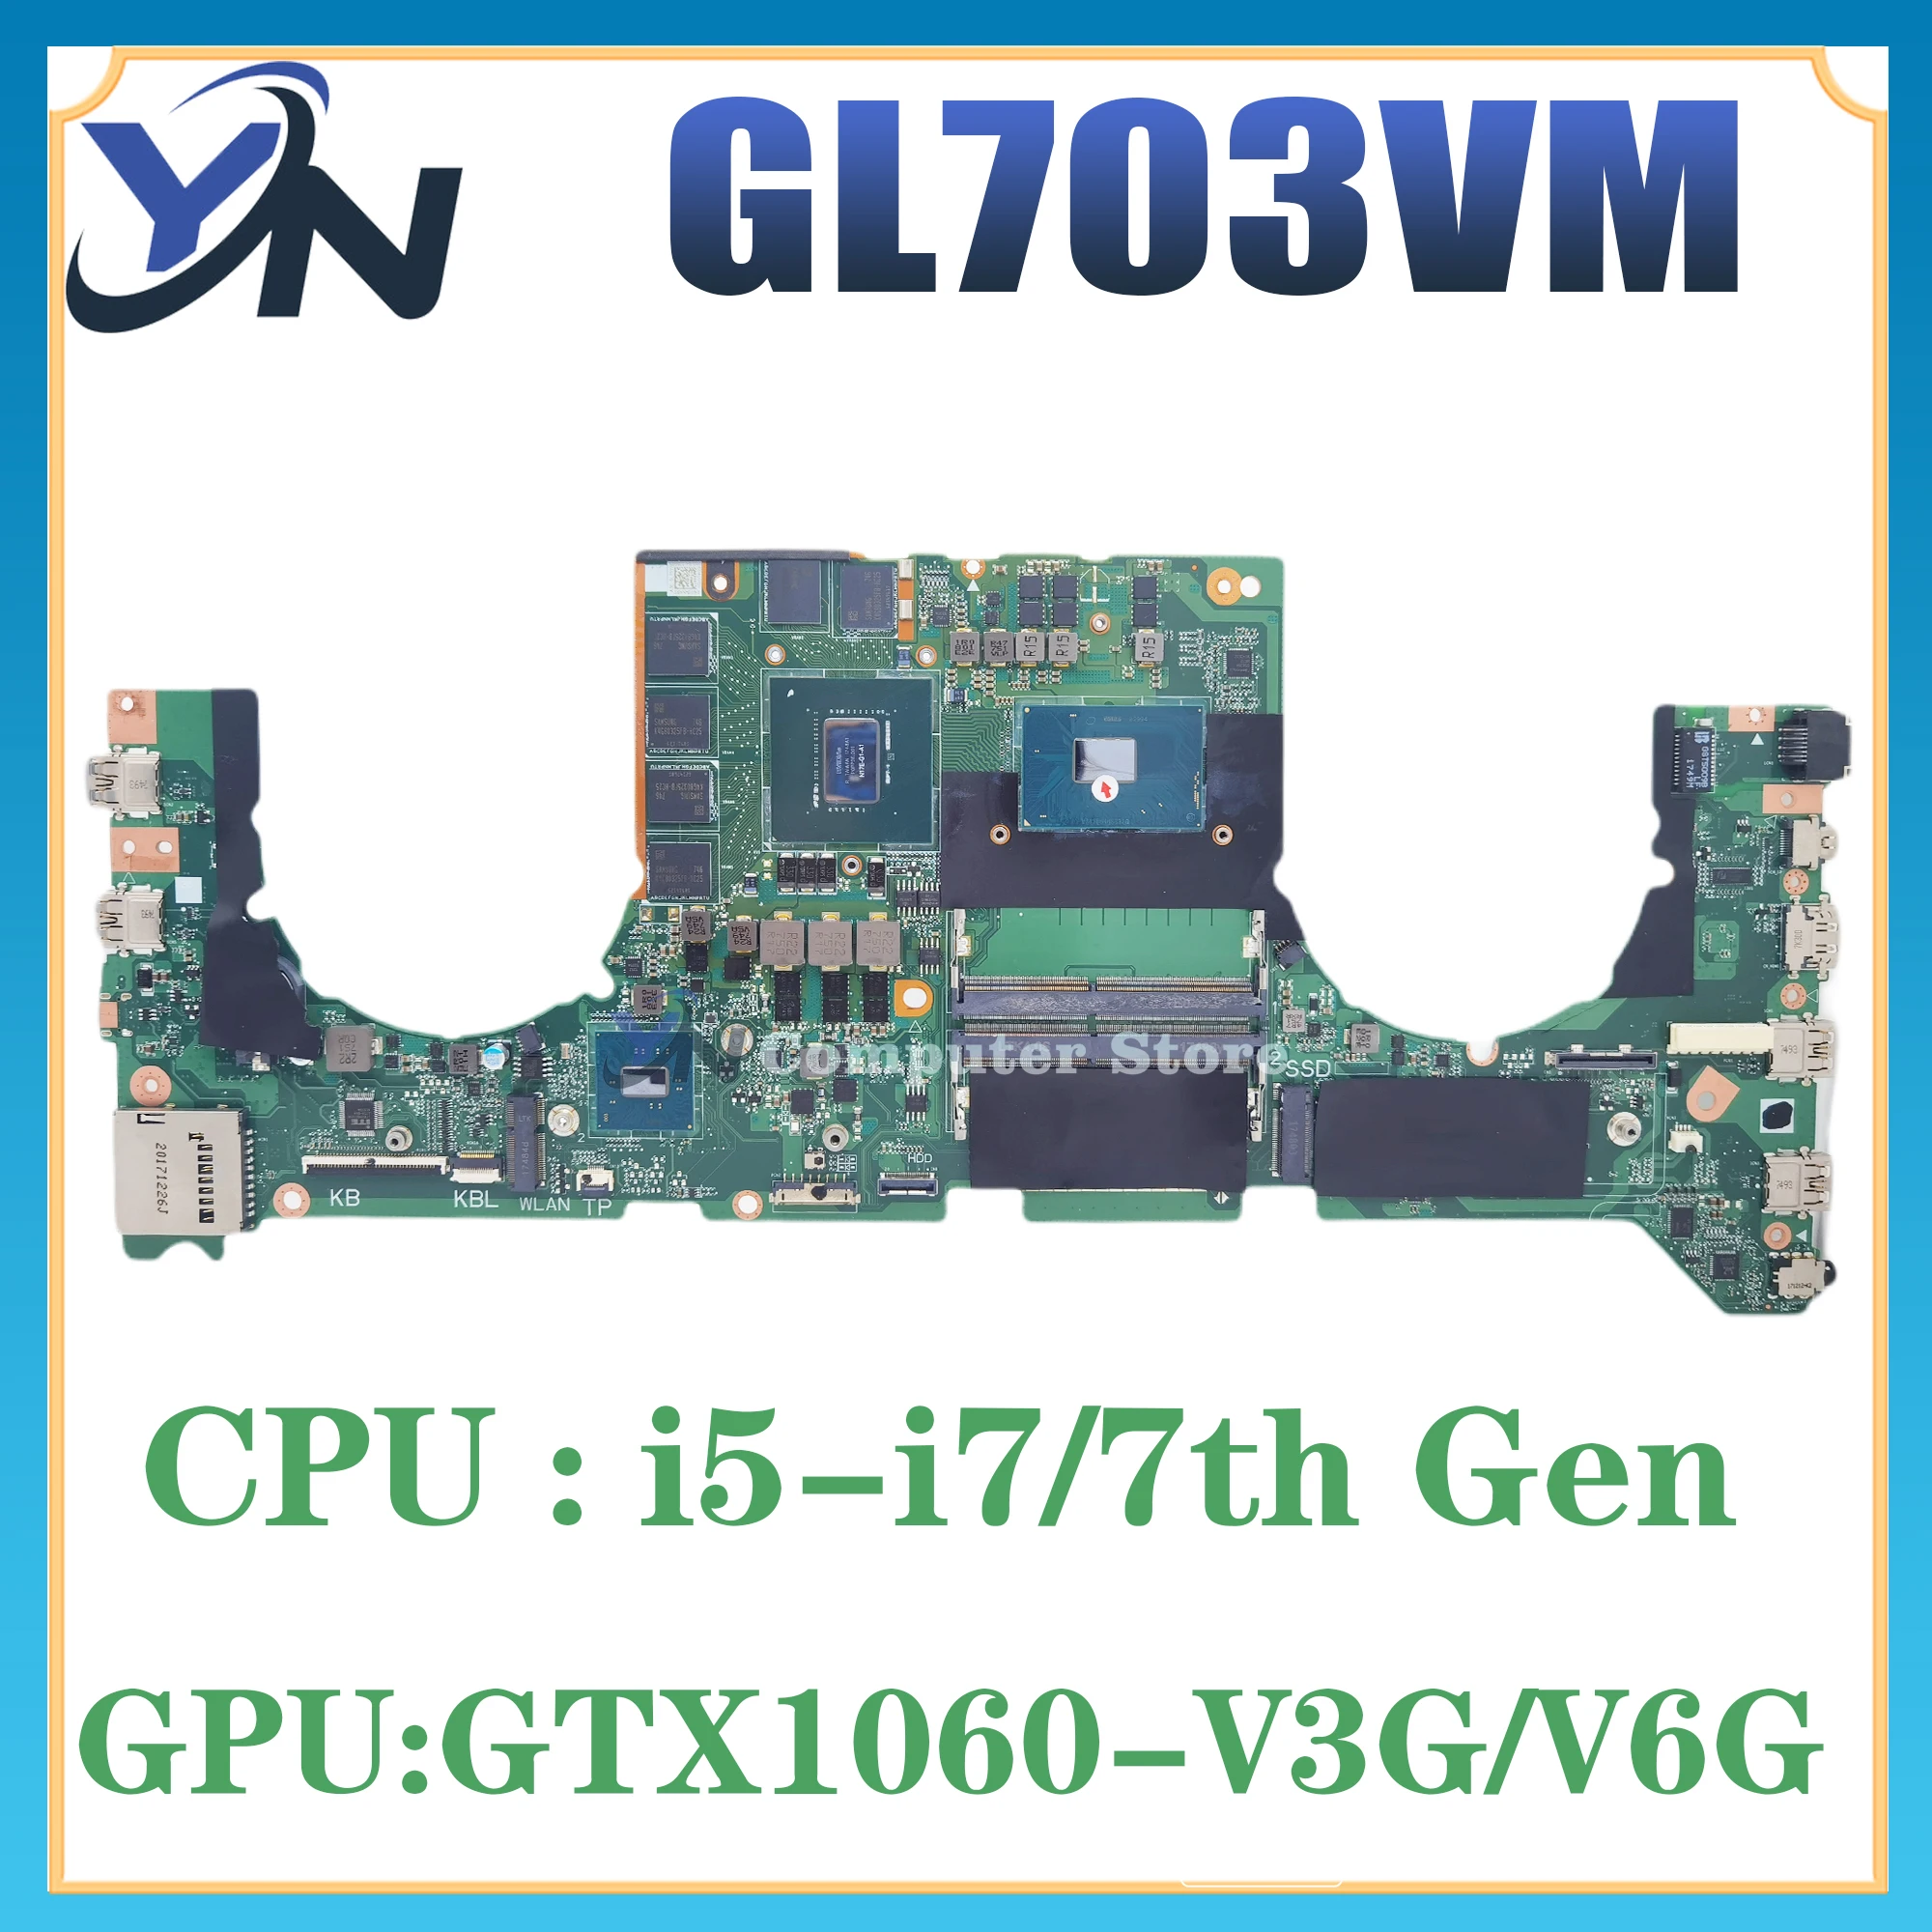 

GL703VM (DABKNMB1AA0)Mainboard For ASUS GL703V Laptop Motherboard W/I7-7700HQ I5-7300HQ GTX1060-3G/6G N17E-G1-A1 100% Test OK